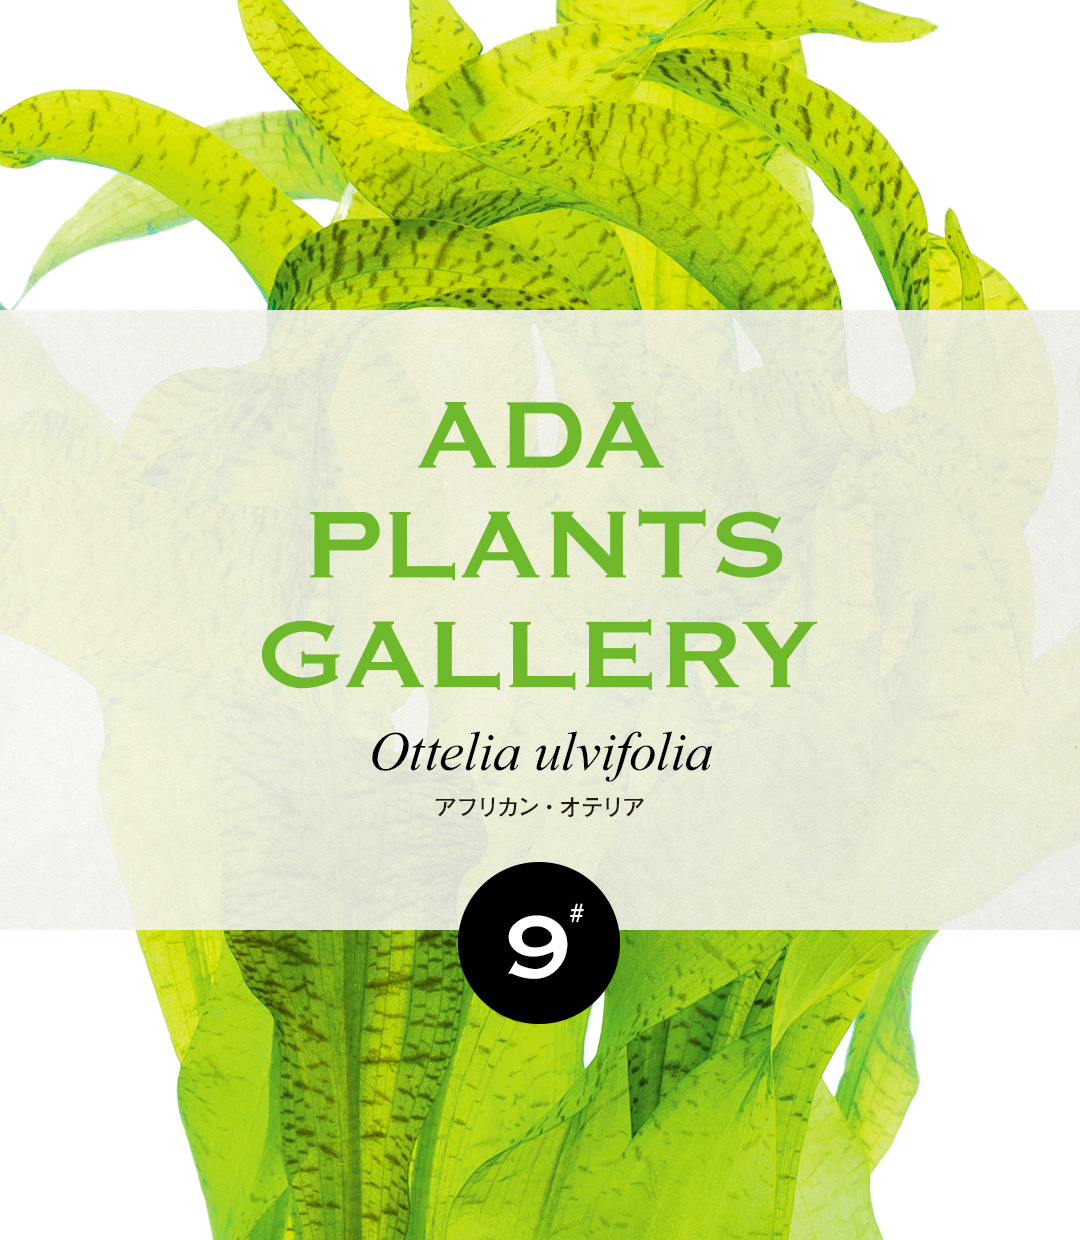 ADA PLANTS GALLERY #09 Ottelia ulvifolia